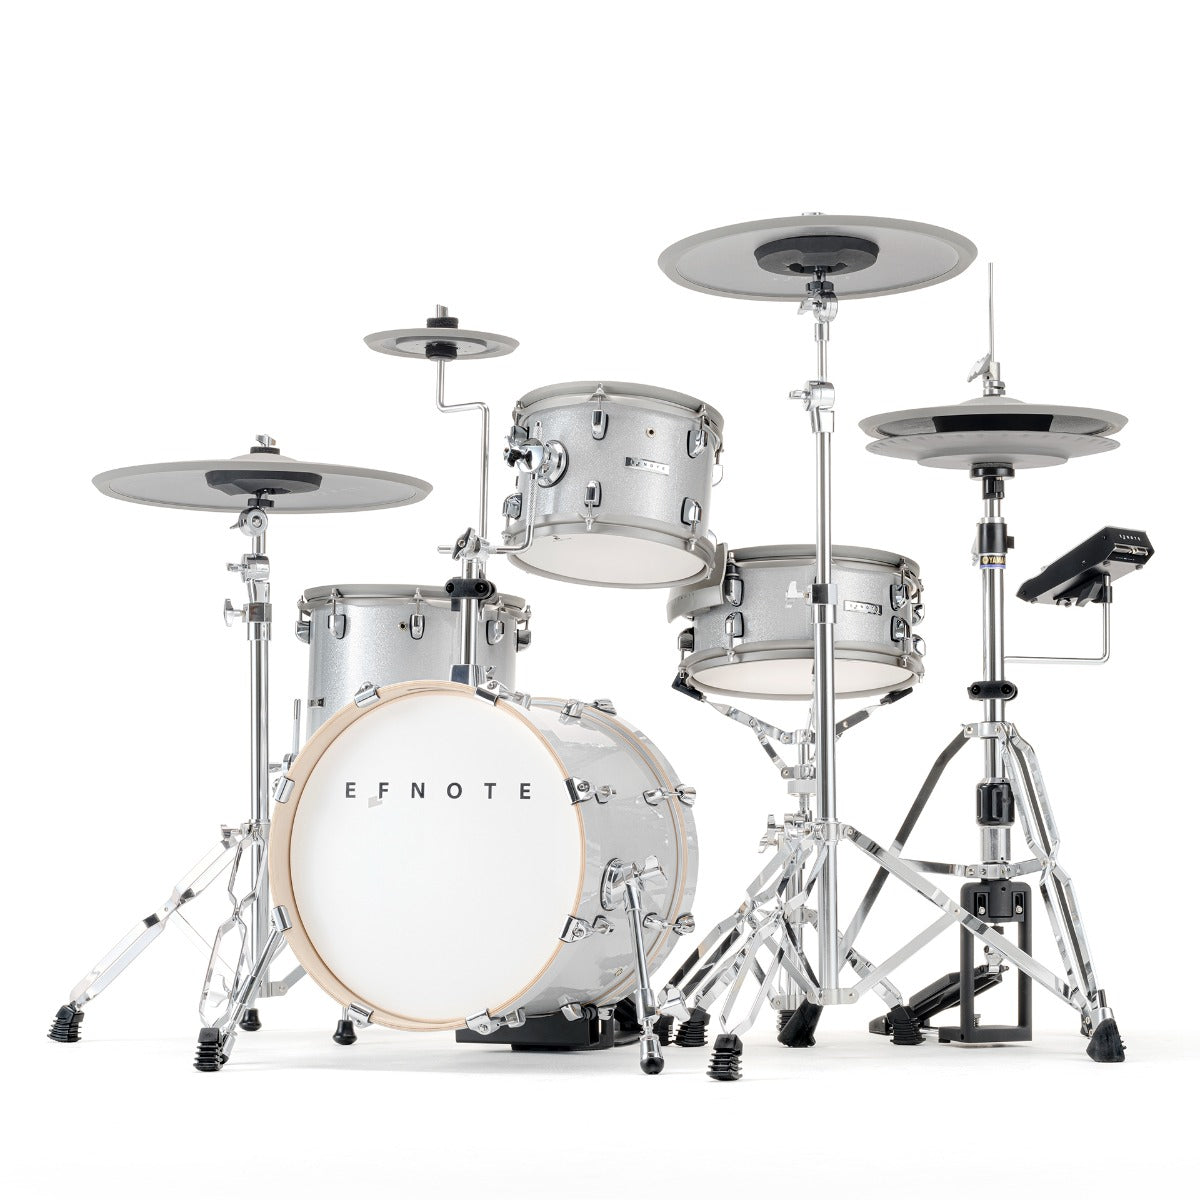 EFNOTE 5 Electronic Drum Set - White Sparkle view 1